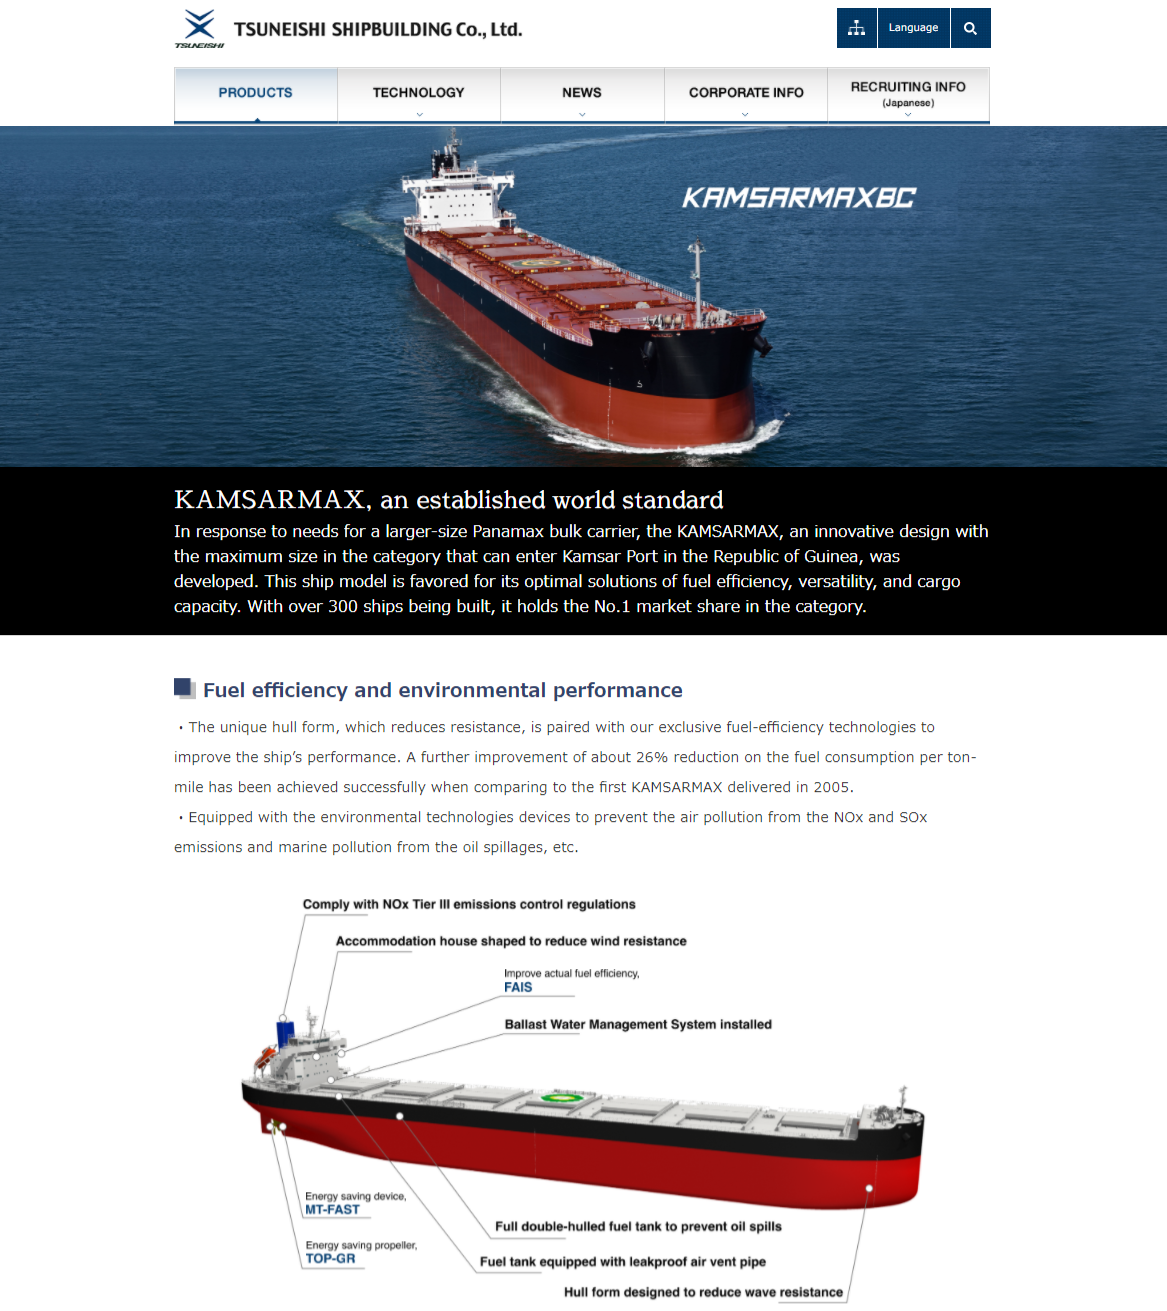 TSUNEISHI SHIPBUILDING renews Products information page